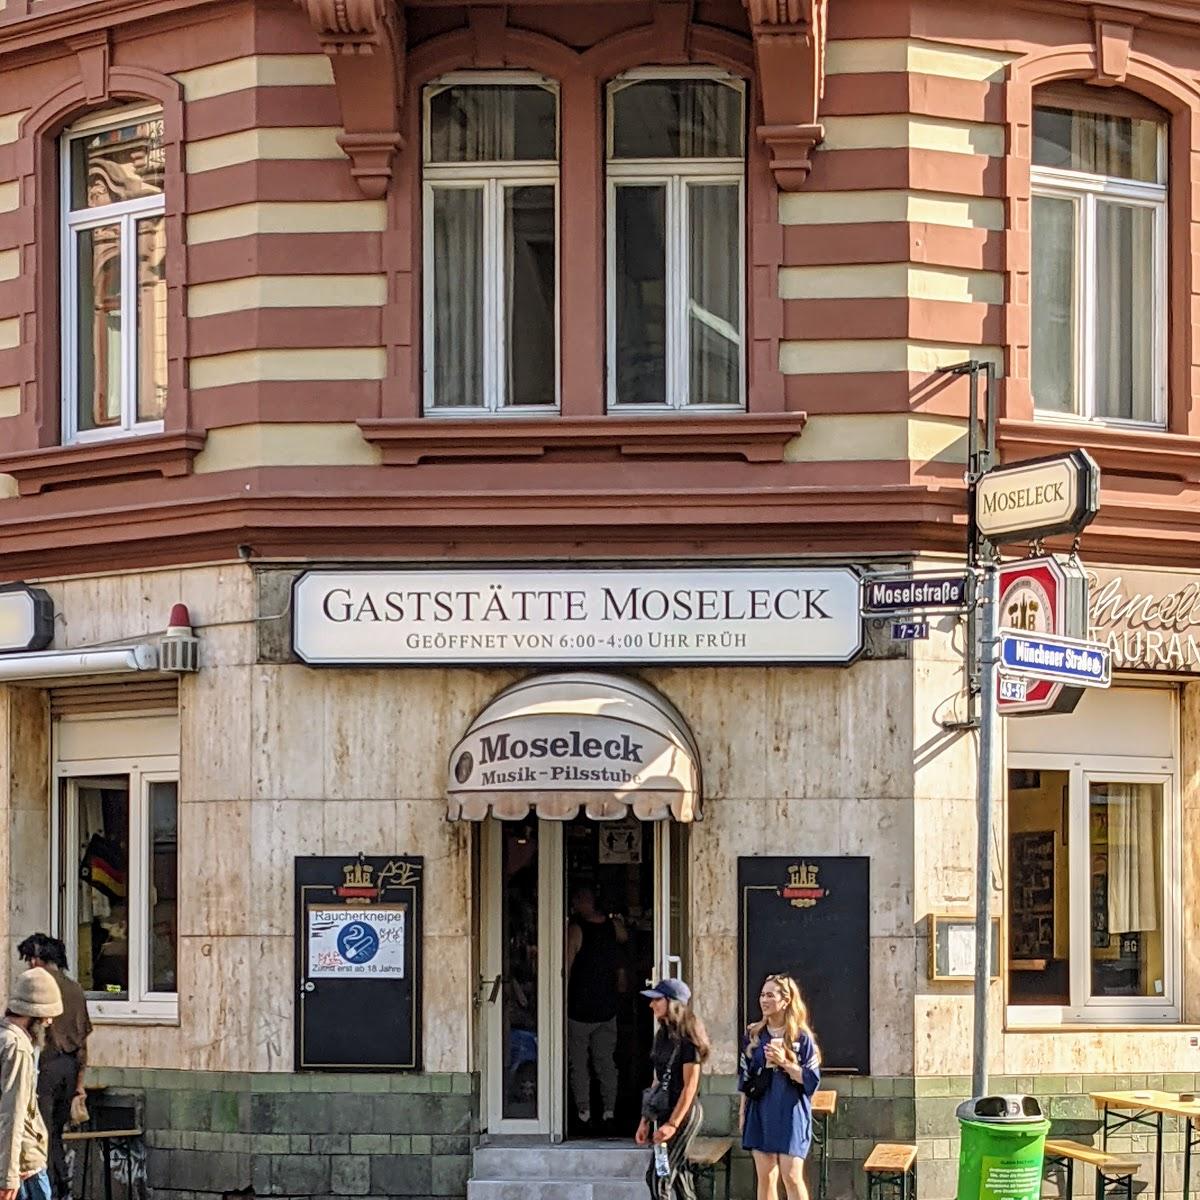 Restaurant "Moseleck" in Frankfurt am Main